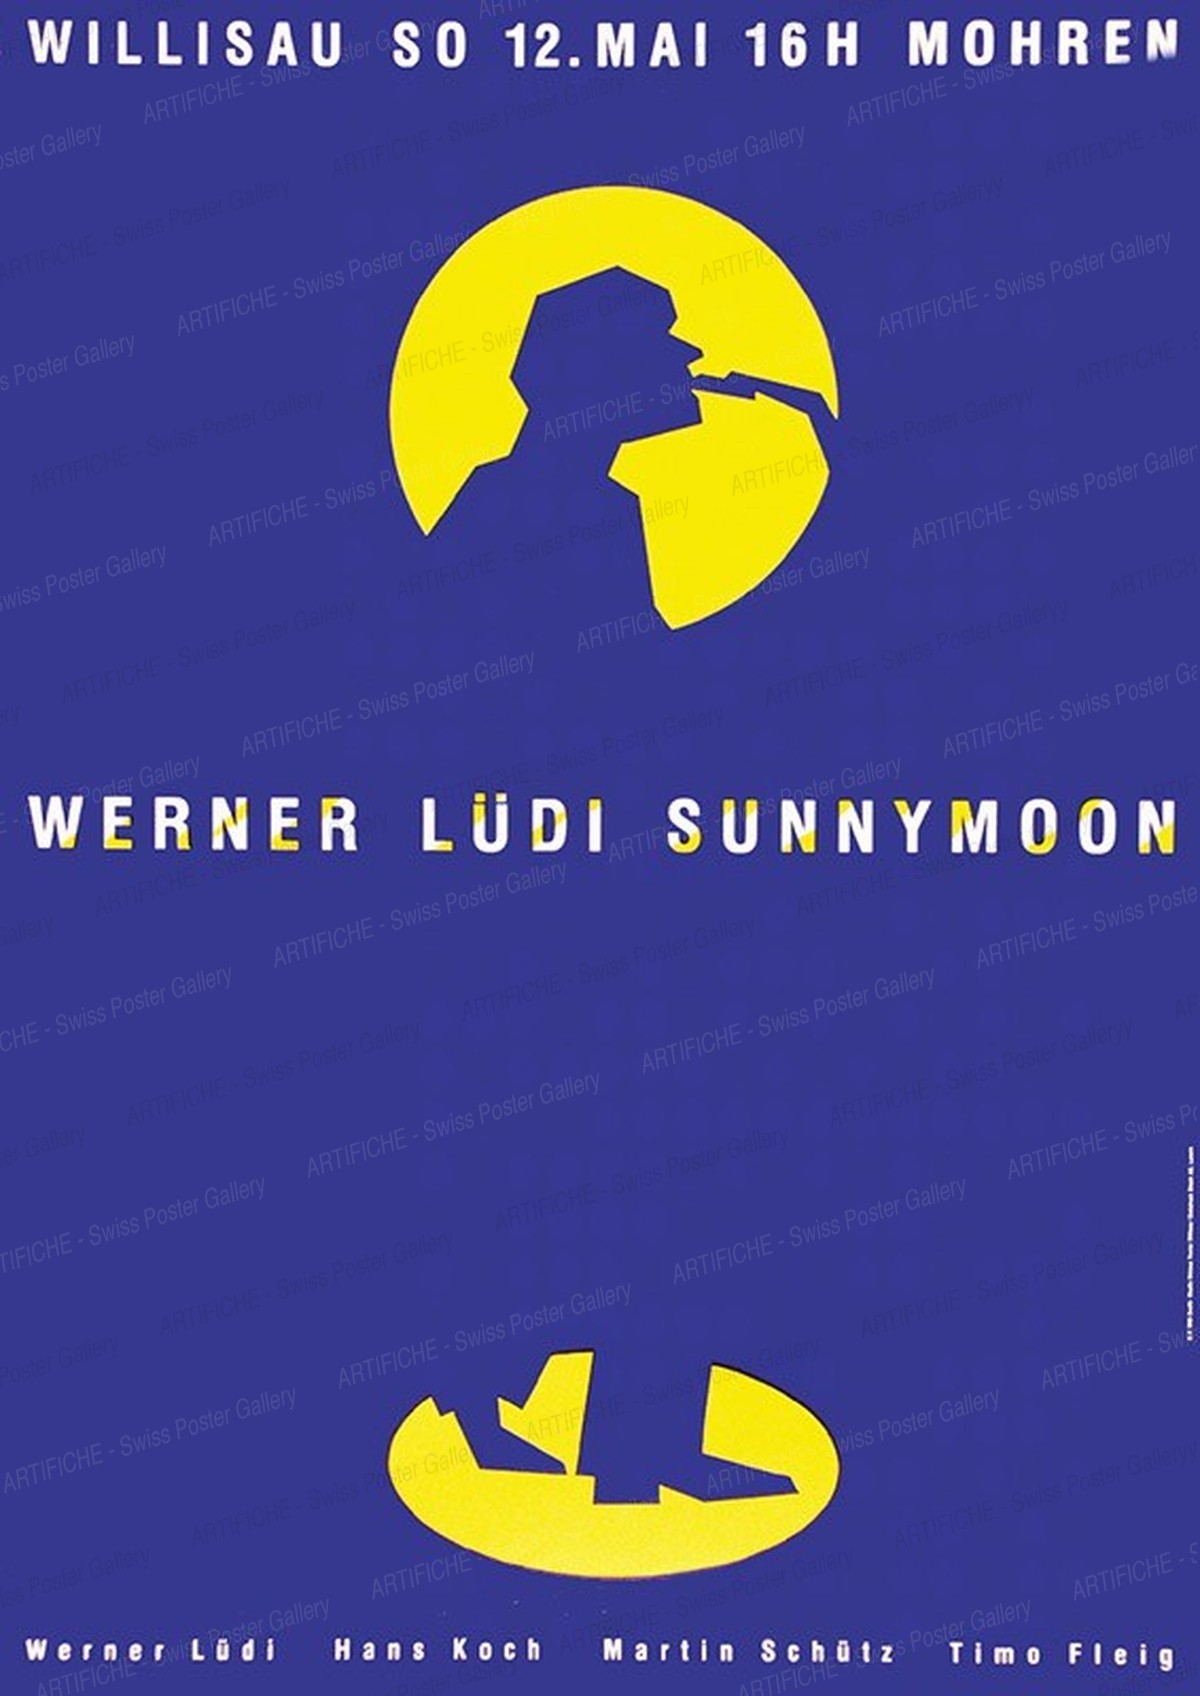 Jazz Willisau – Werner Lüdi Sunnymoon, Niklaus Troxler